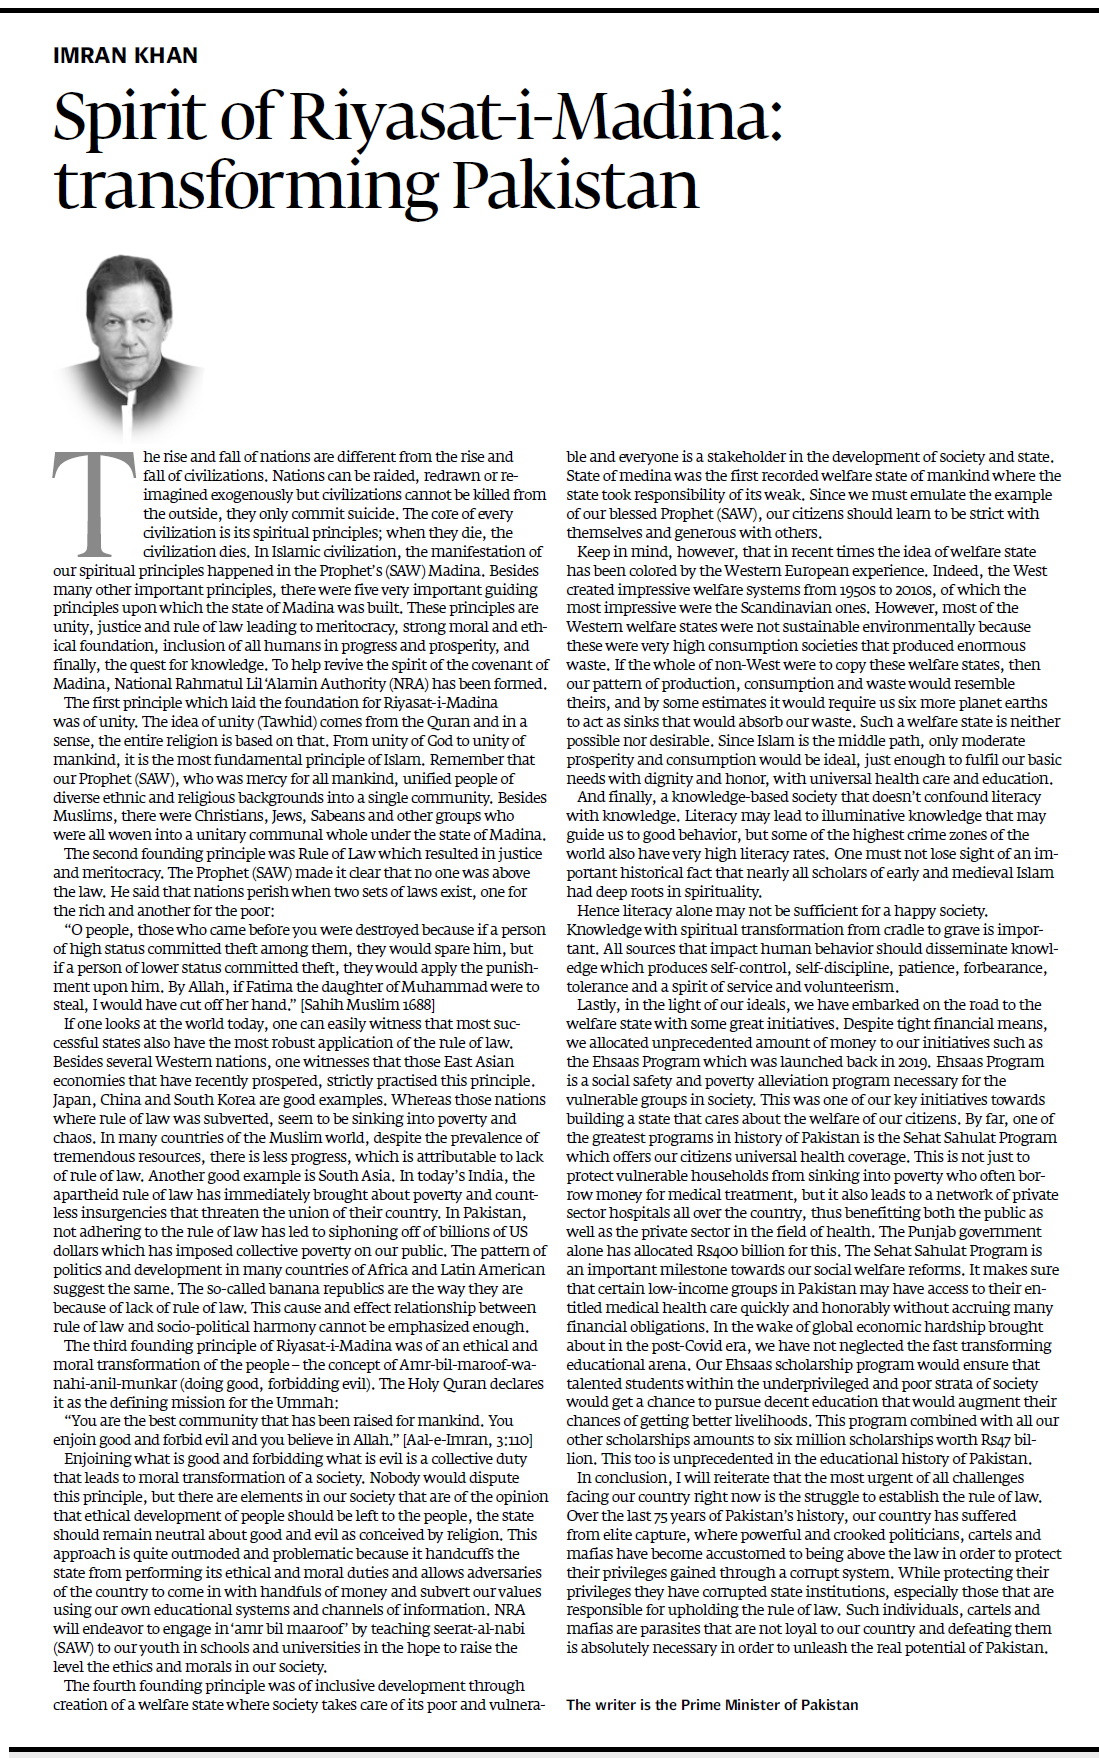 The article of Prime Minister Imran Khan on Spirit of Riyasat-i-Madina: Transforming Pakistan.